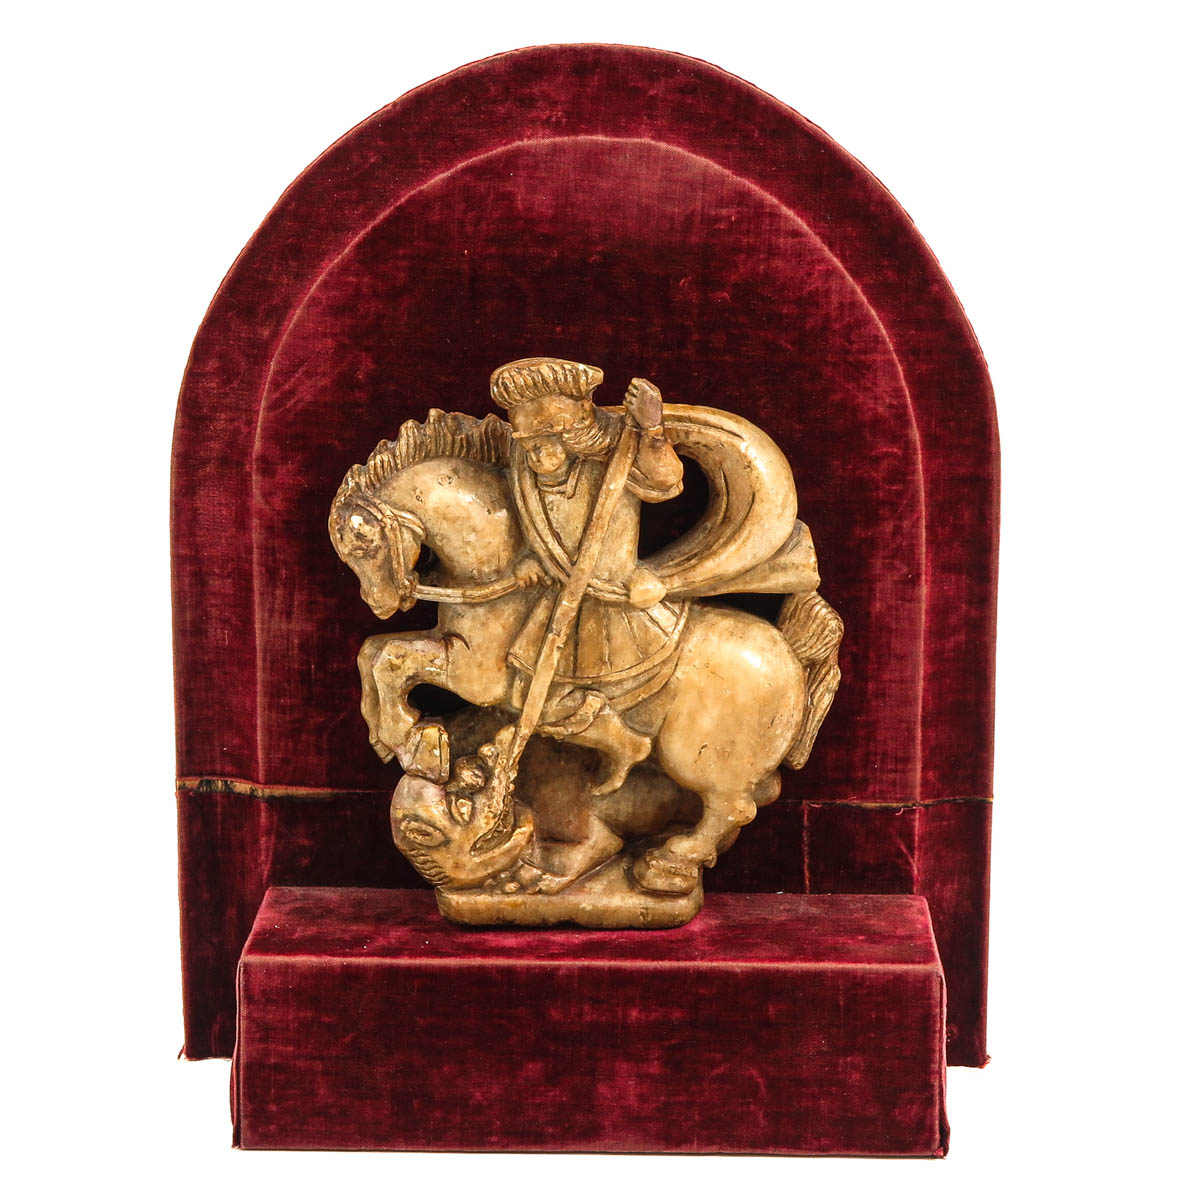 A 16th Century Religious Alabaster Sculpture